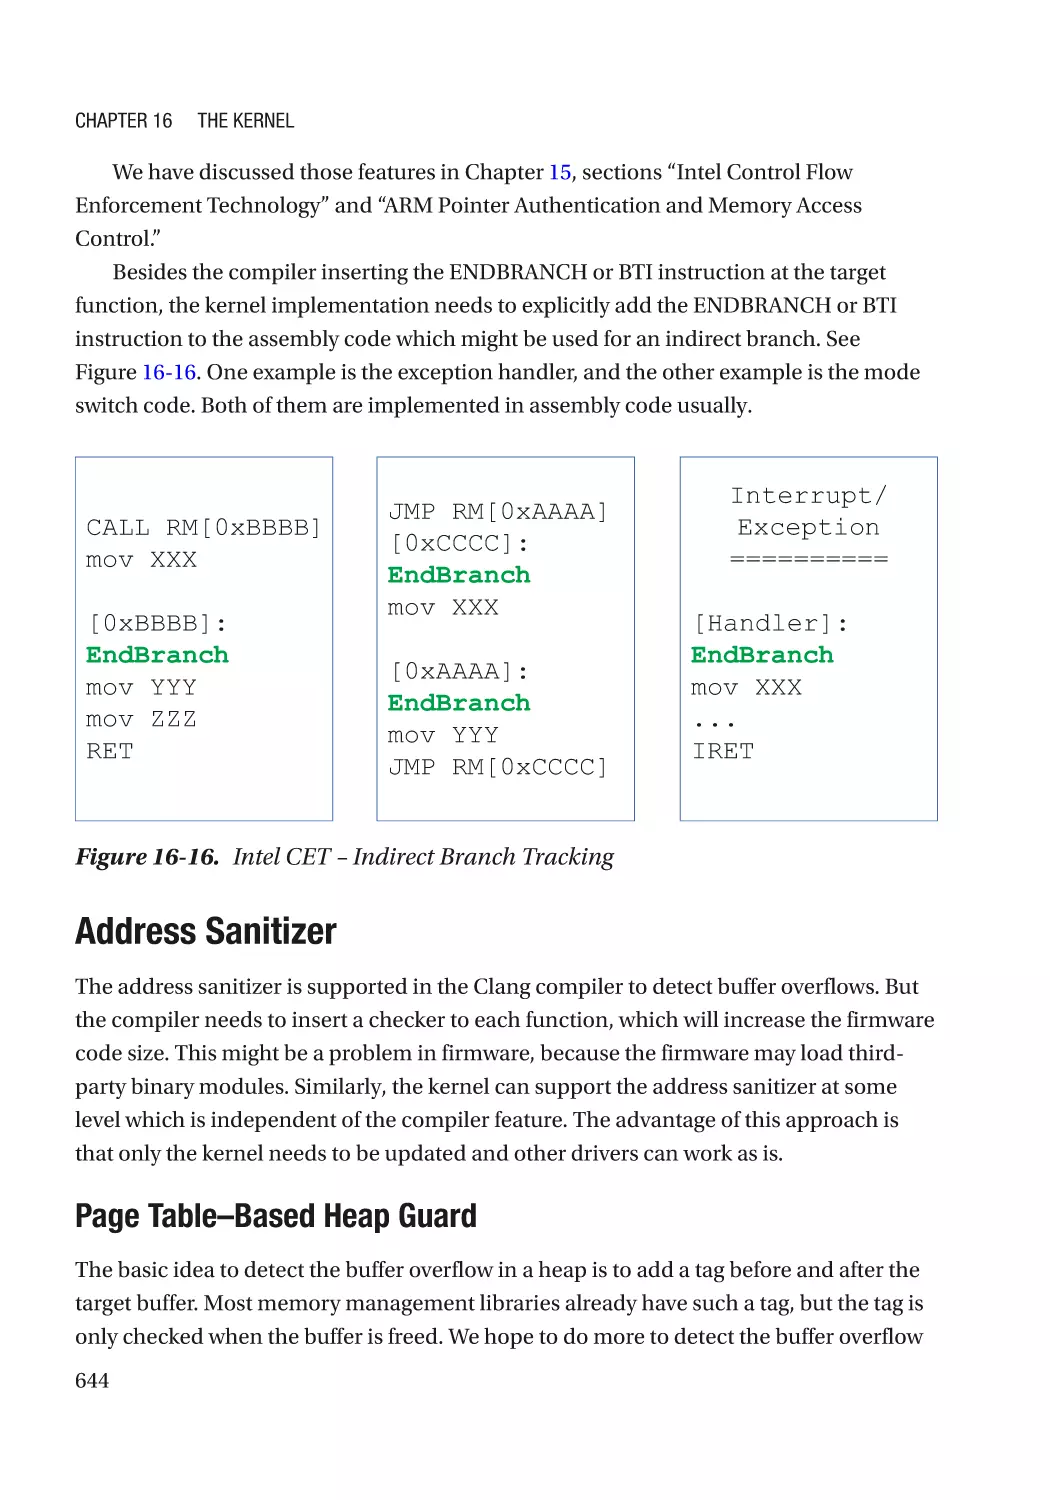 Address Sanitizer
Page Table–Based Heap Guard